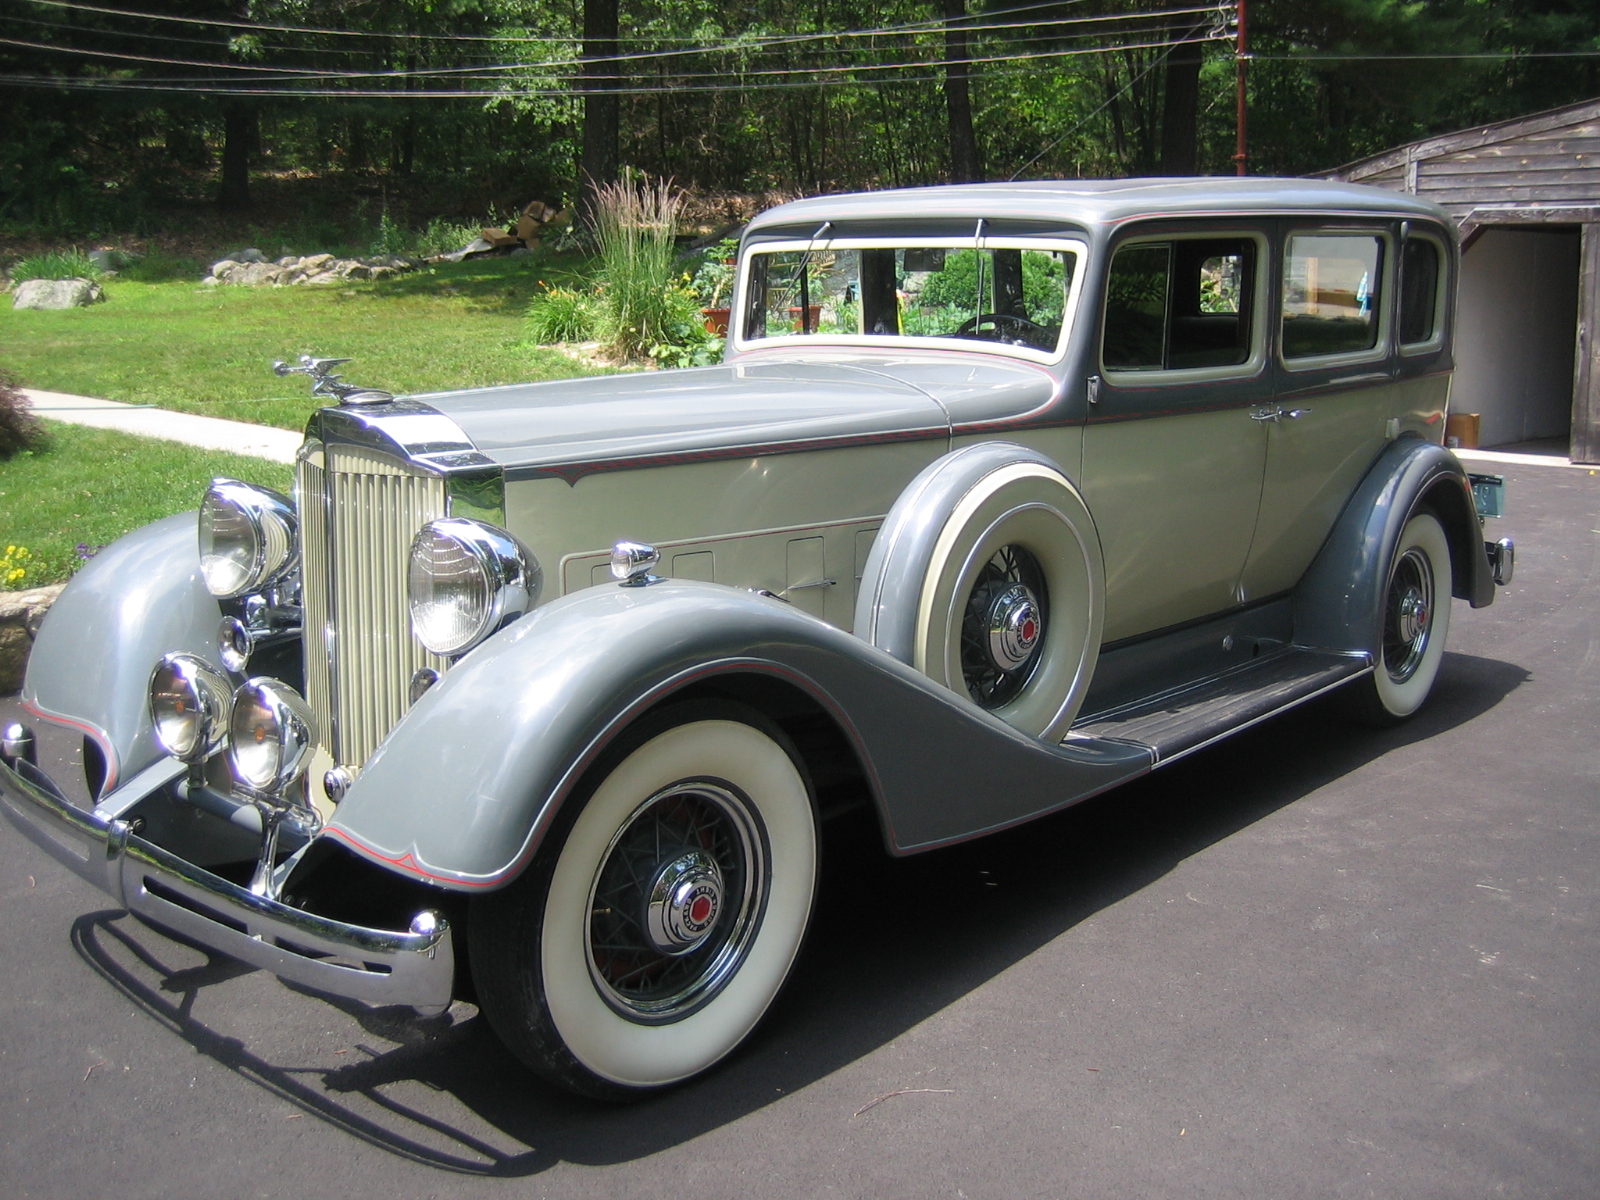 1934 Packard Super Eight Sedan car for sale.